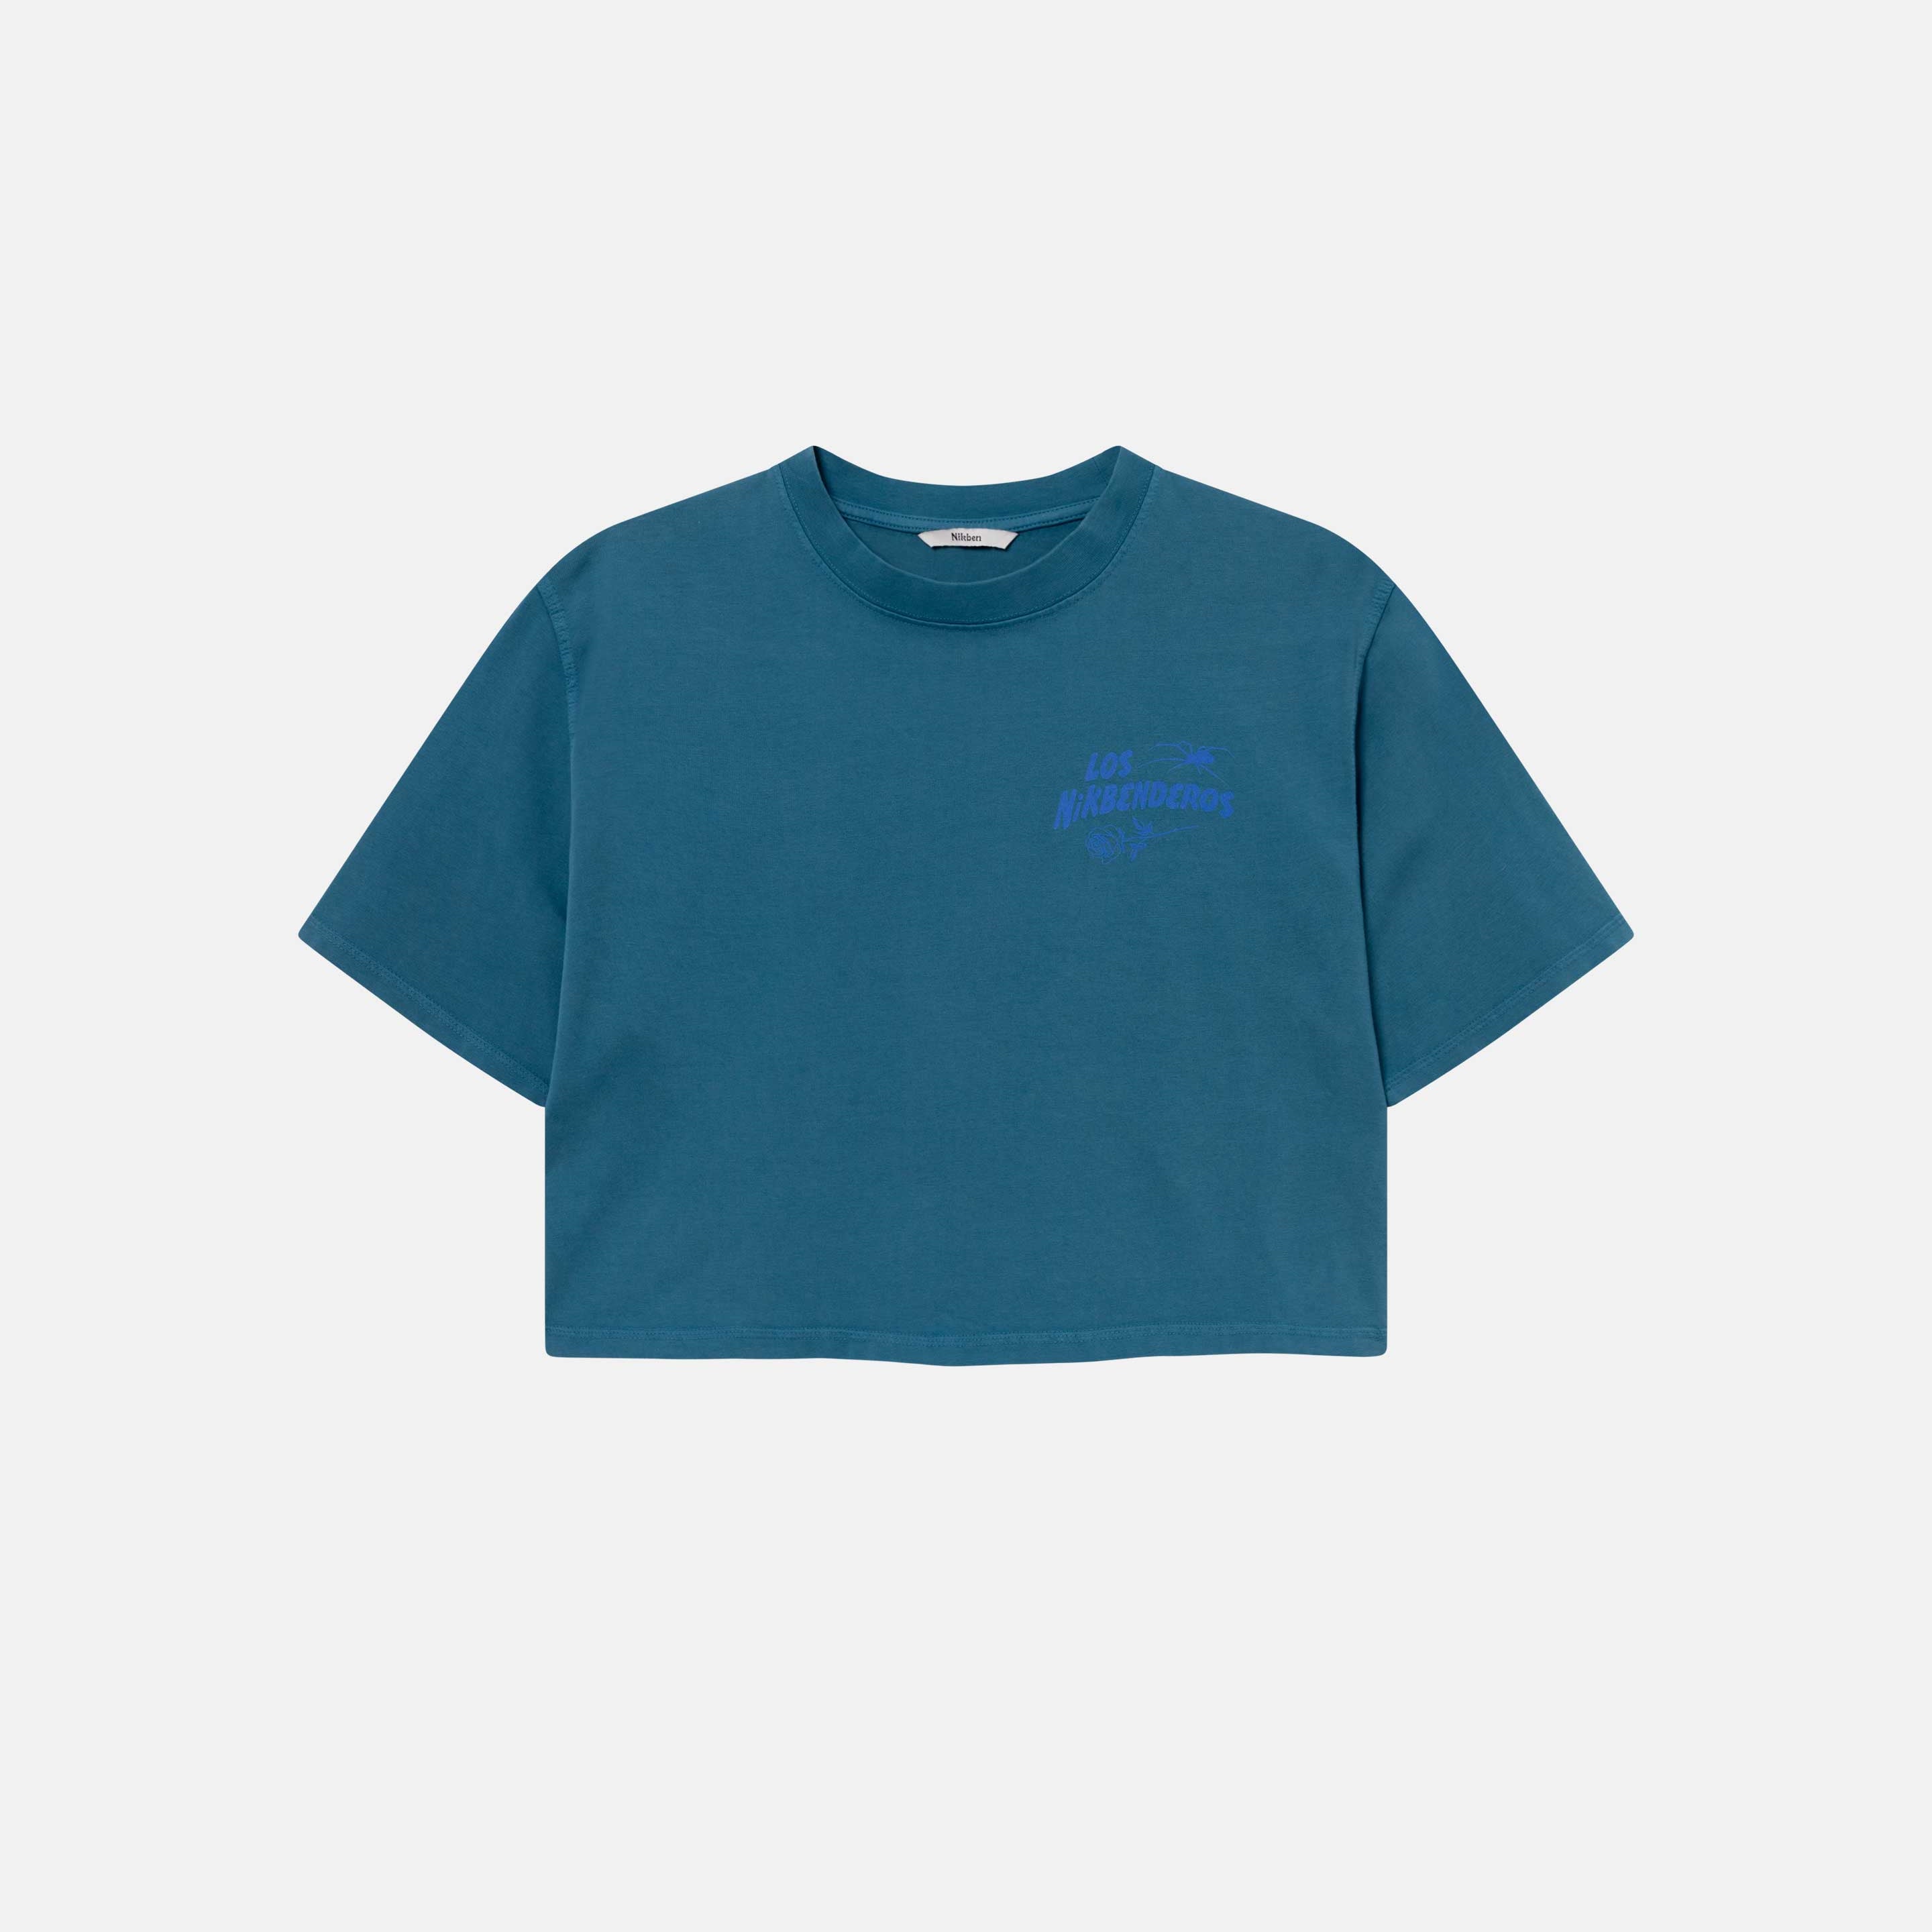 A navy blue cropped t-shirt blue "Los Nikbenderos" chest print